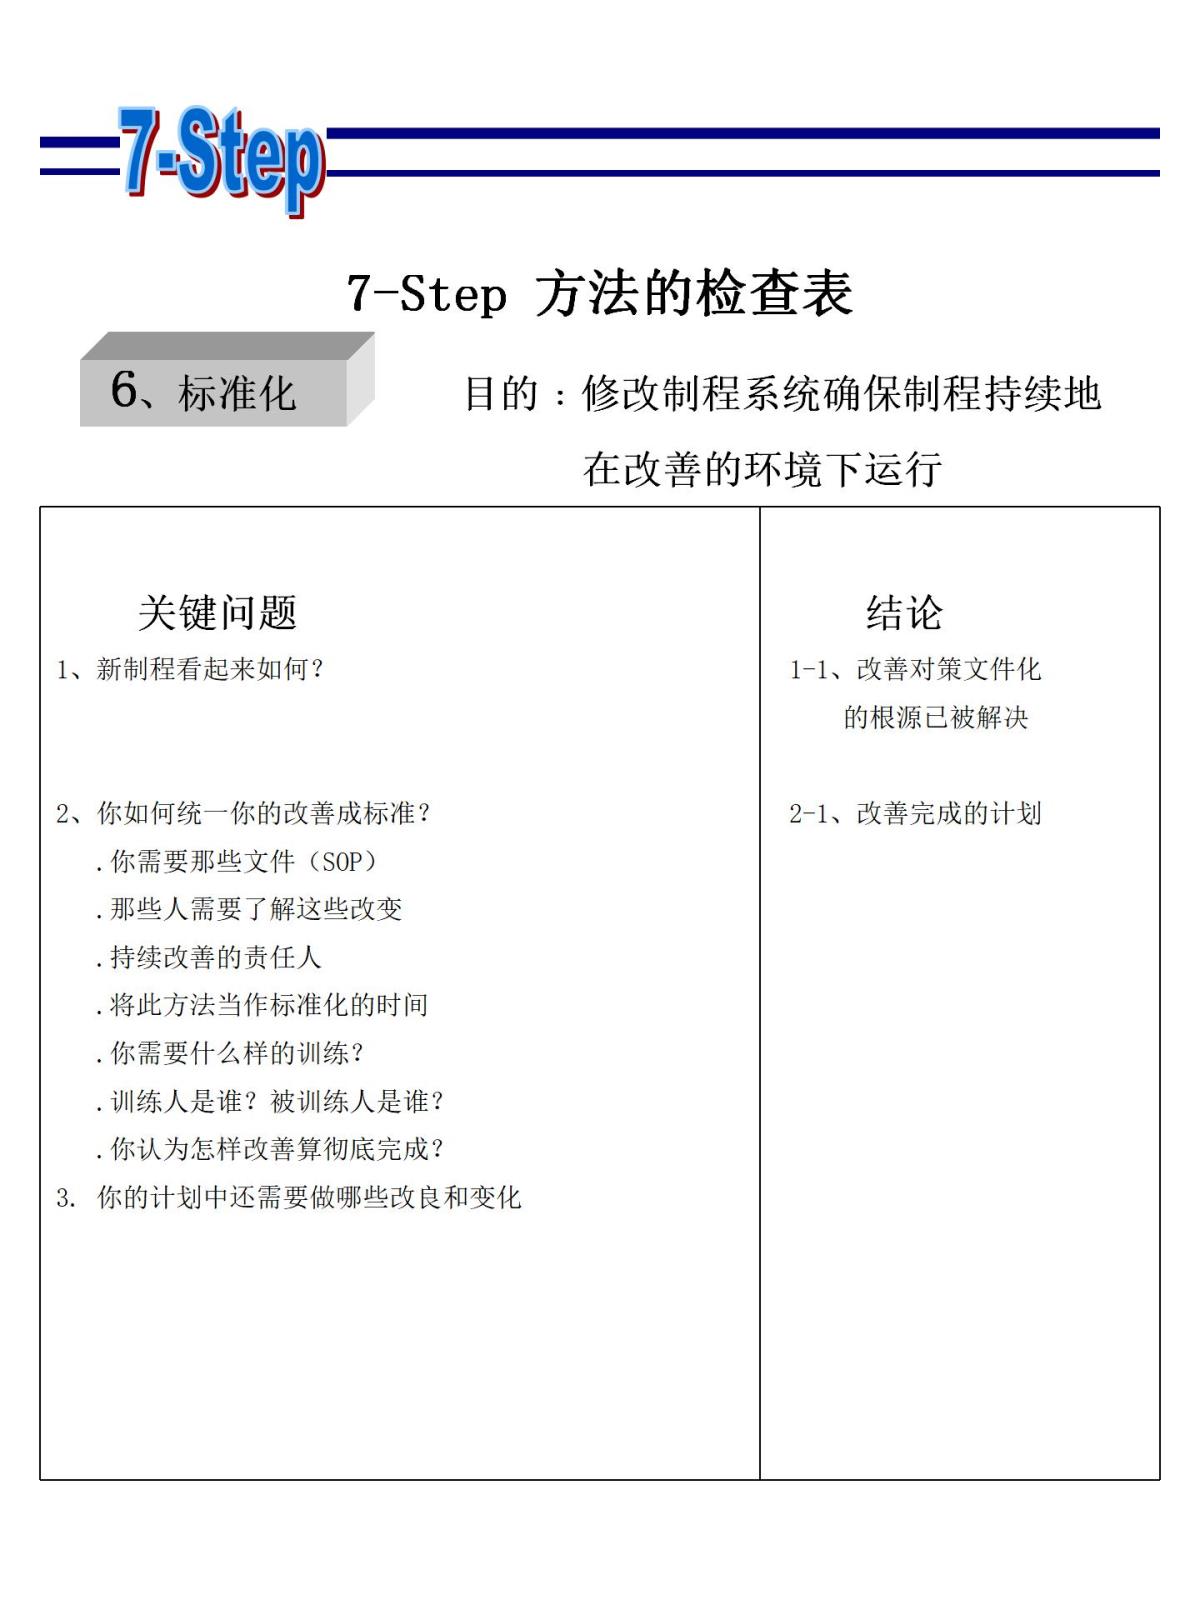 7-step方法_06.jpg